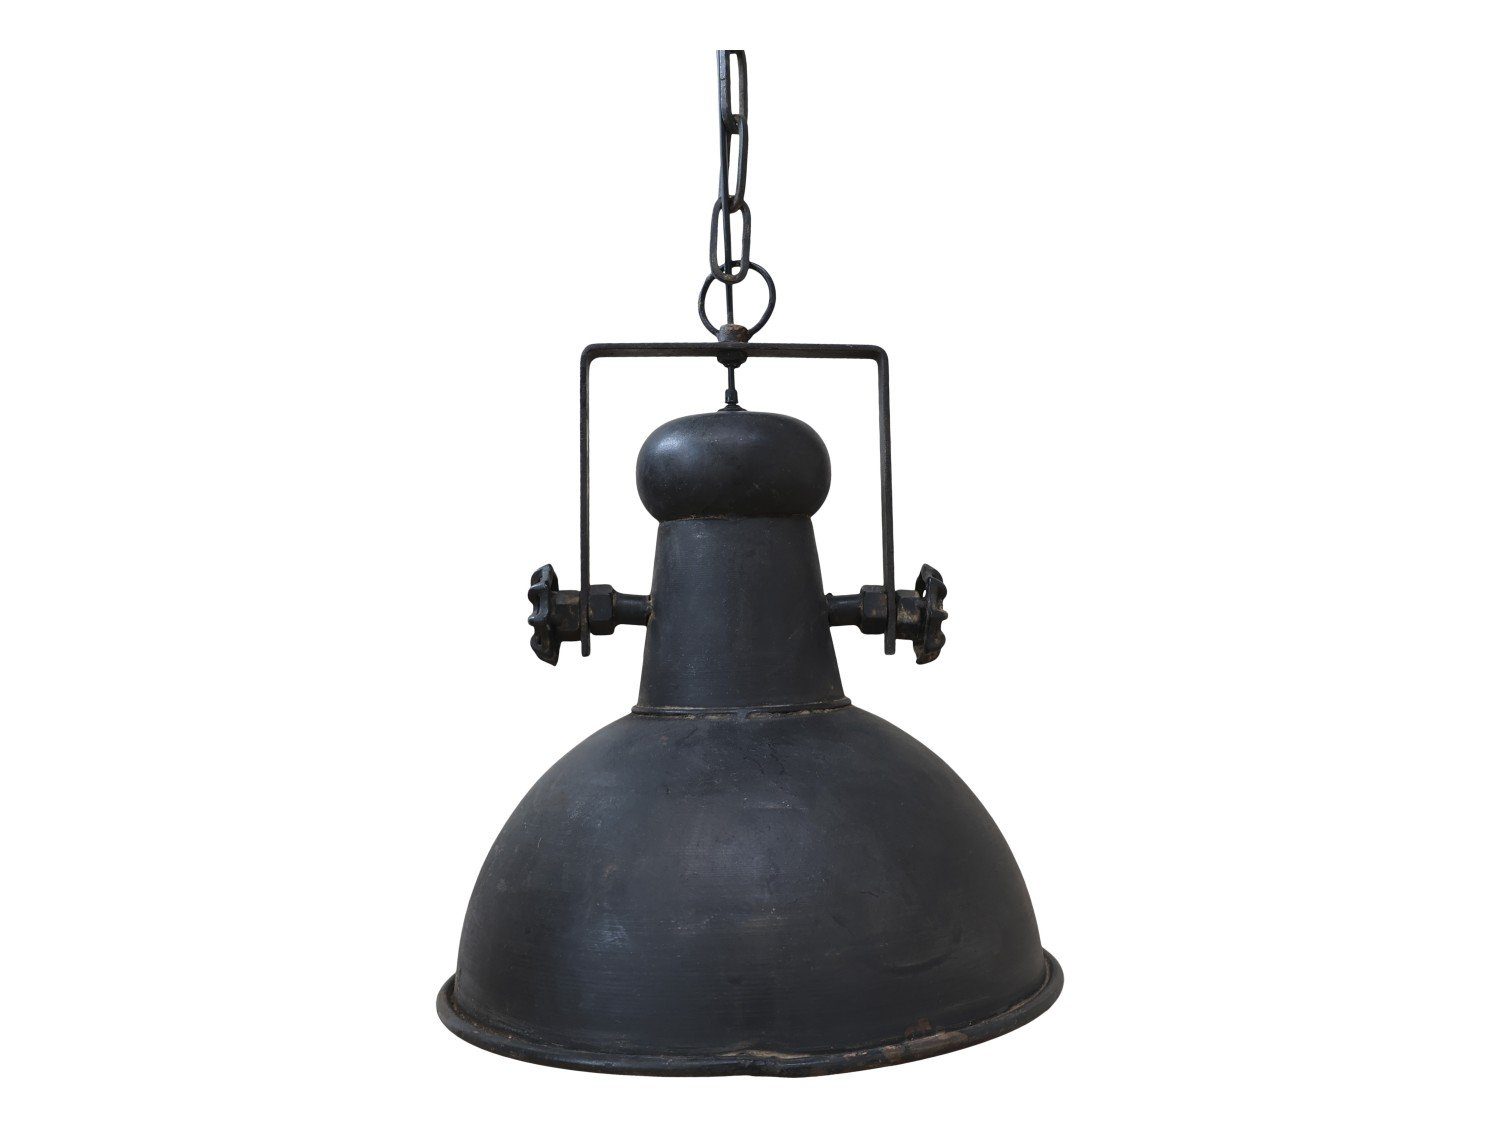 AURUM Hängeleuchte Lampe Antique schwarz antique H40/D32 Factory cm * Chic